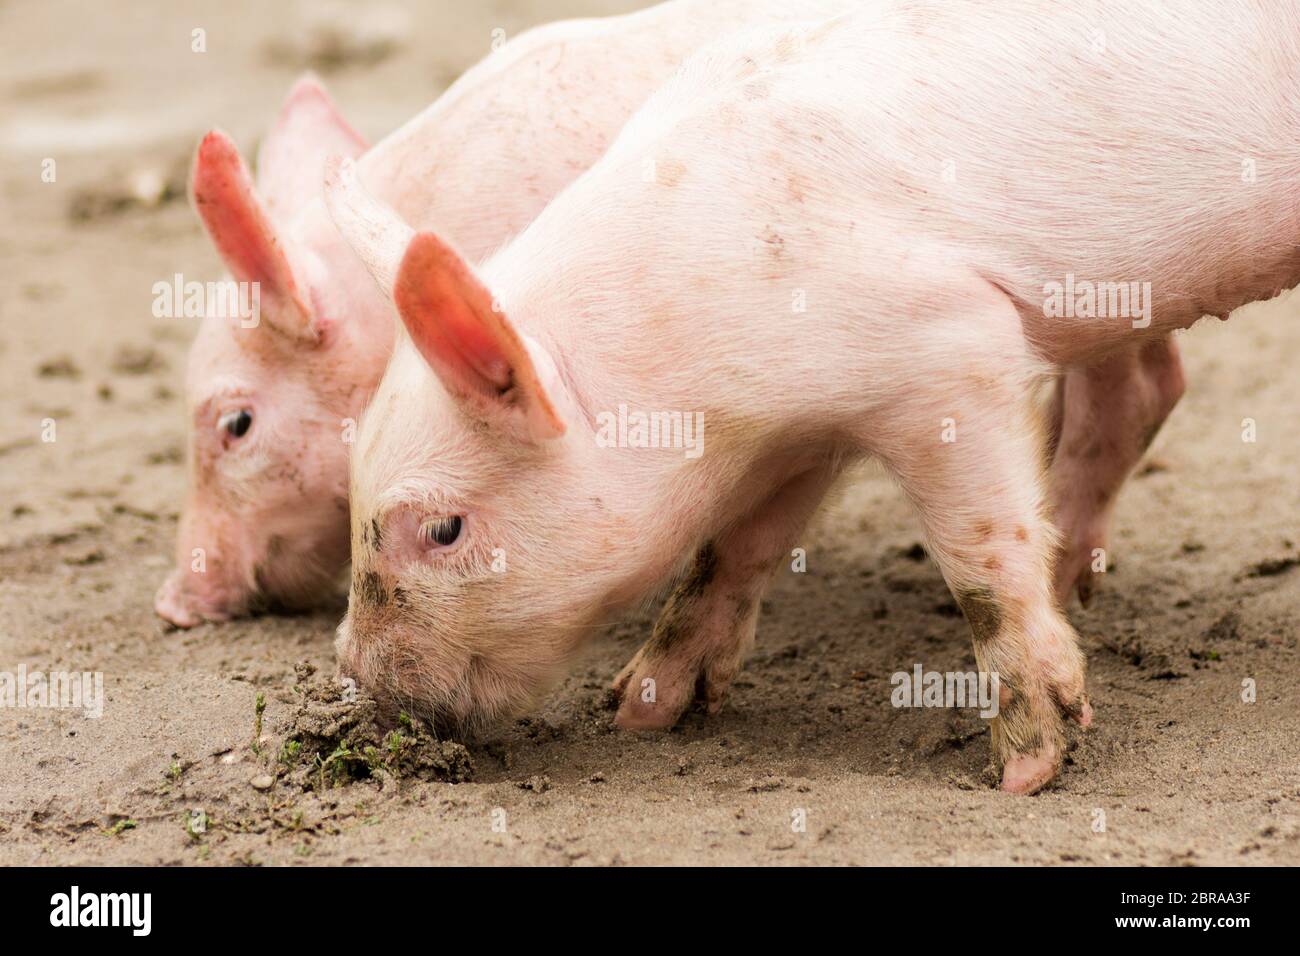 Two little pigs, farm animals on sand, swine breeding concept. Stock Photo